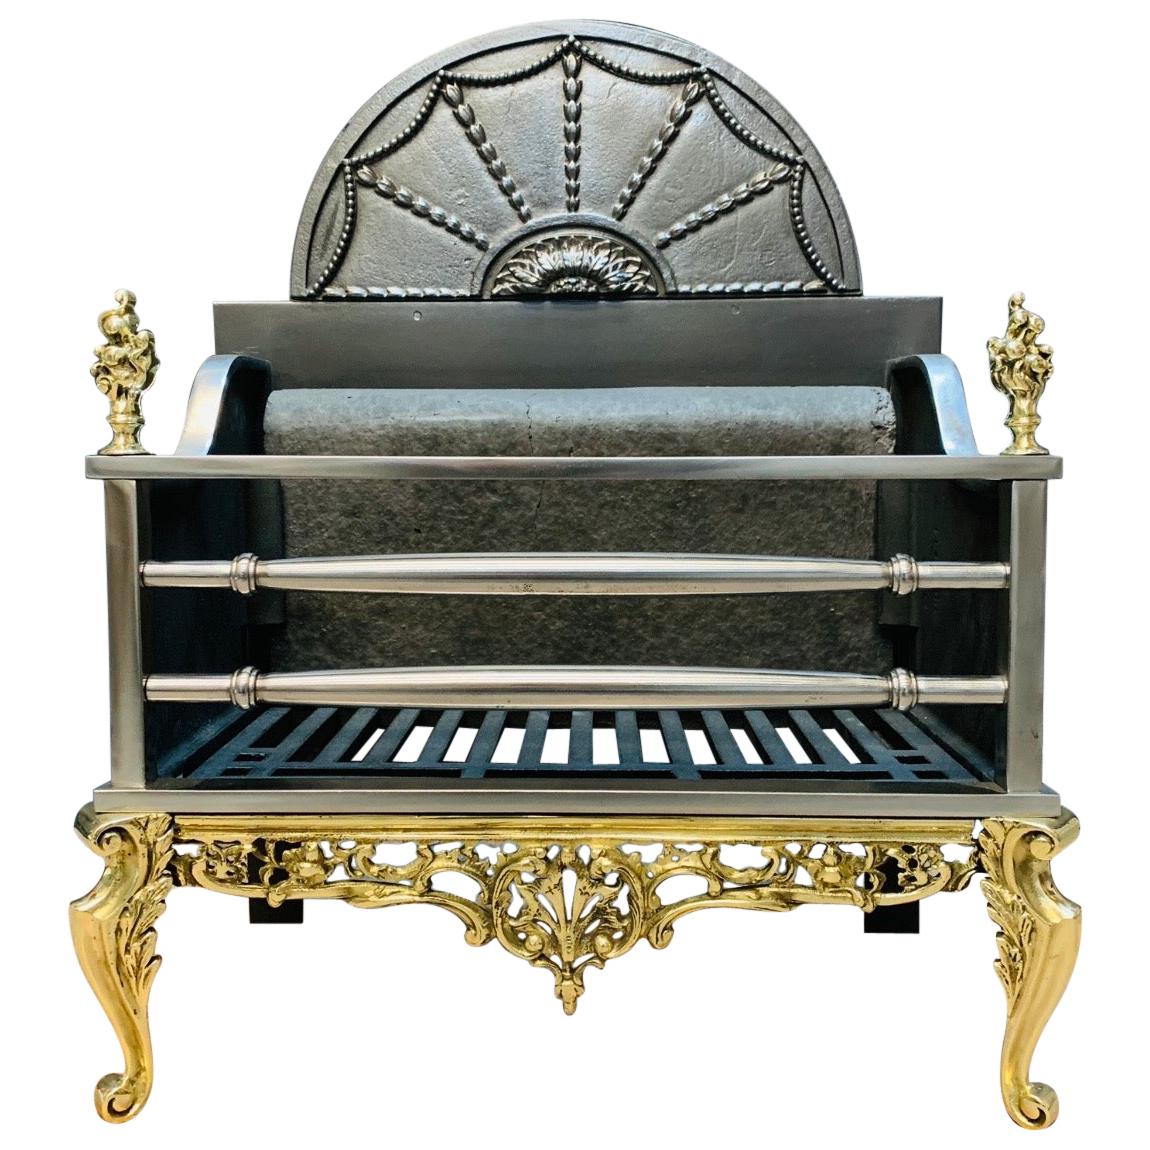 19th Century Georgian Manner Fire Grate Basket